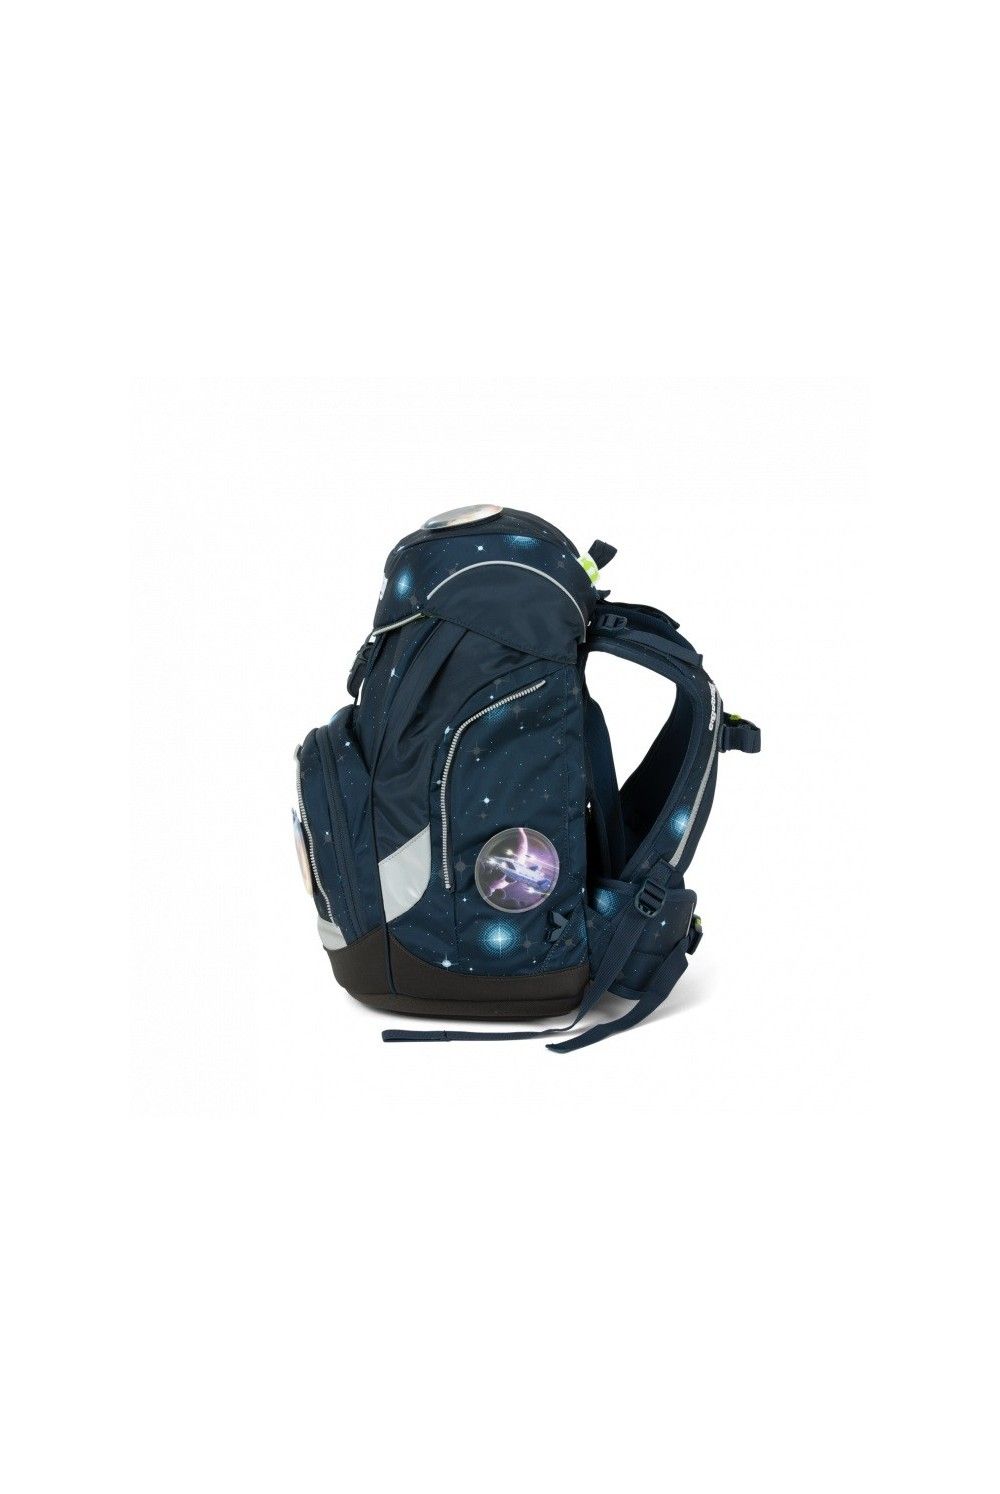 ergobag pack school backpack set 6 pieces Galaxy Edition KoBaernikus